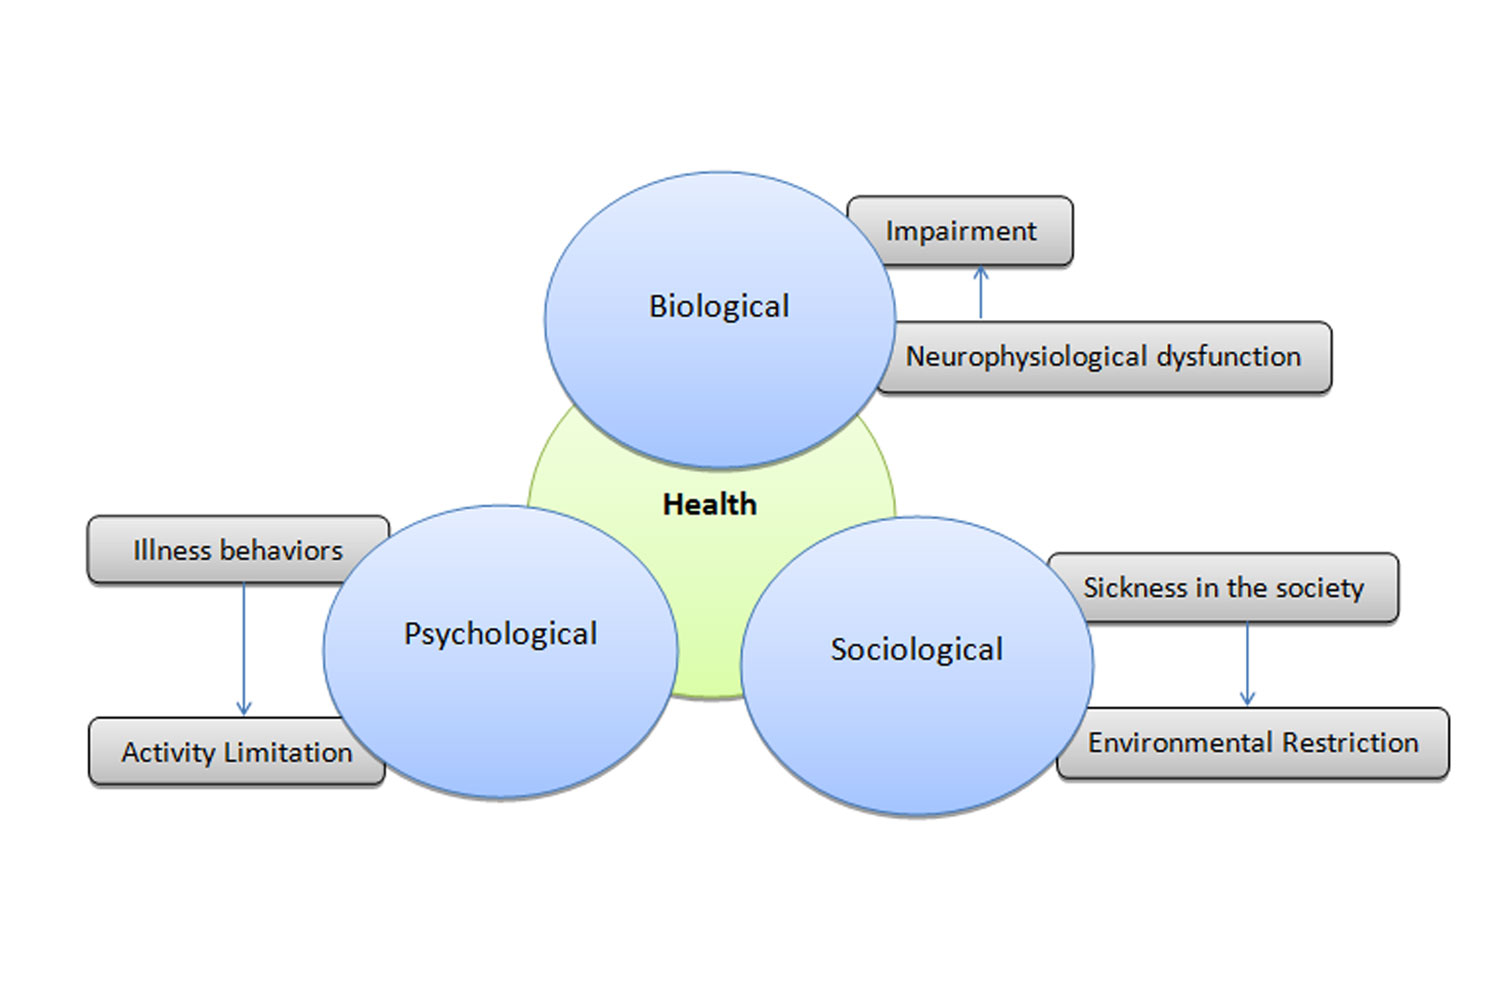 Bio-psychosocial Model Of Health